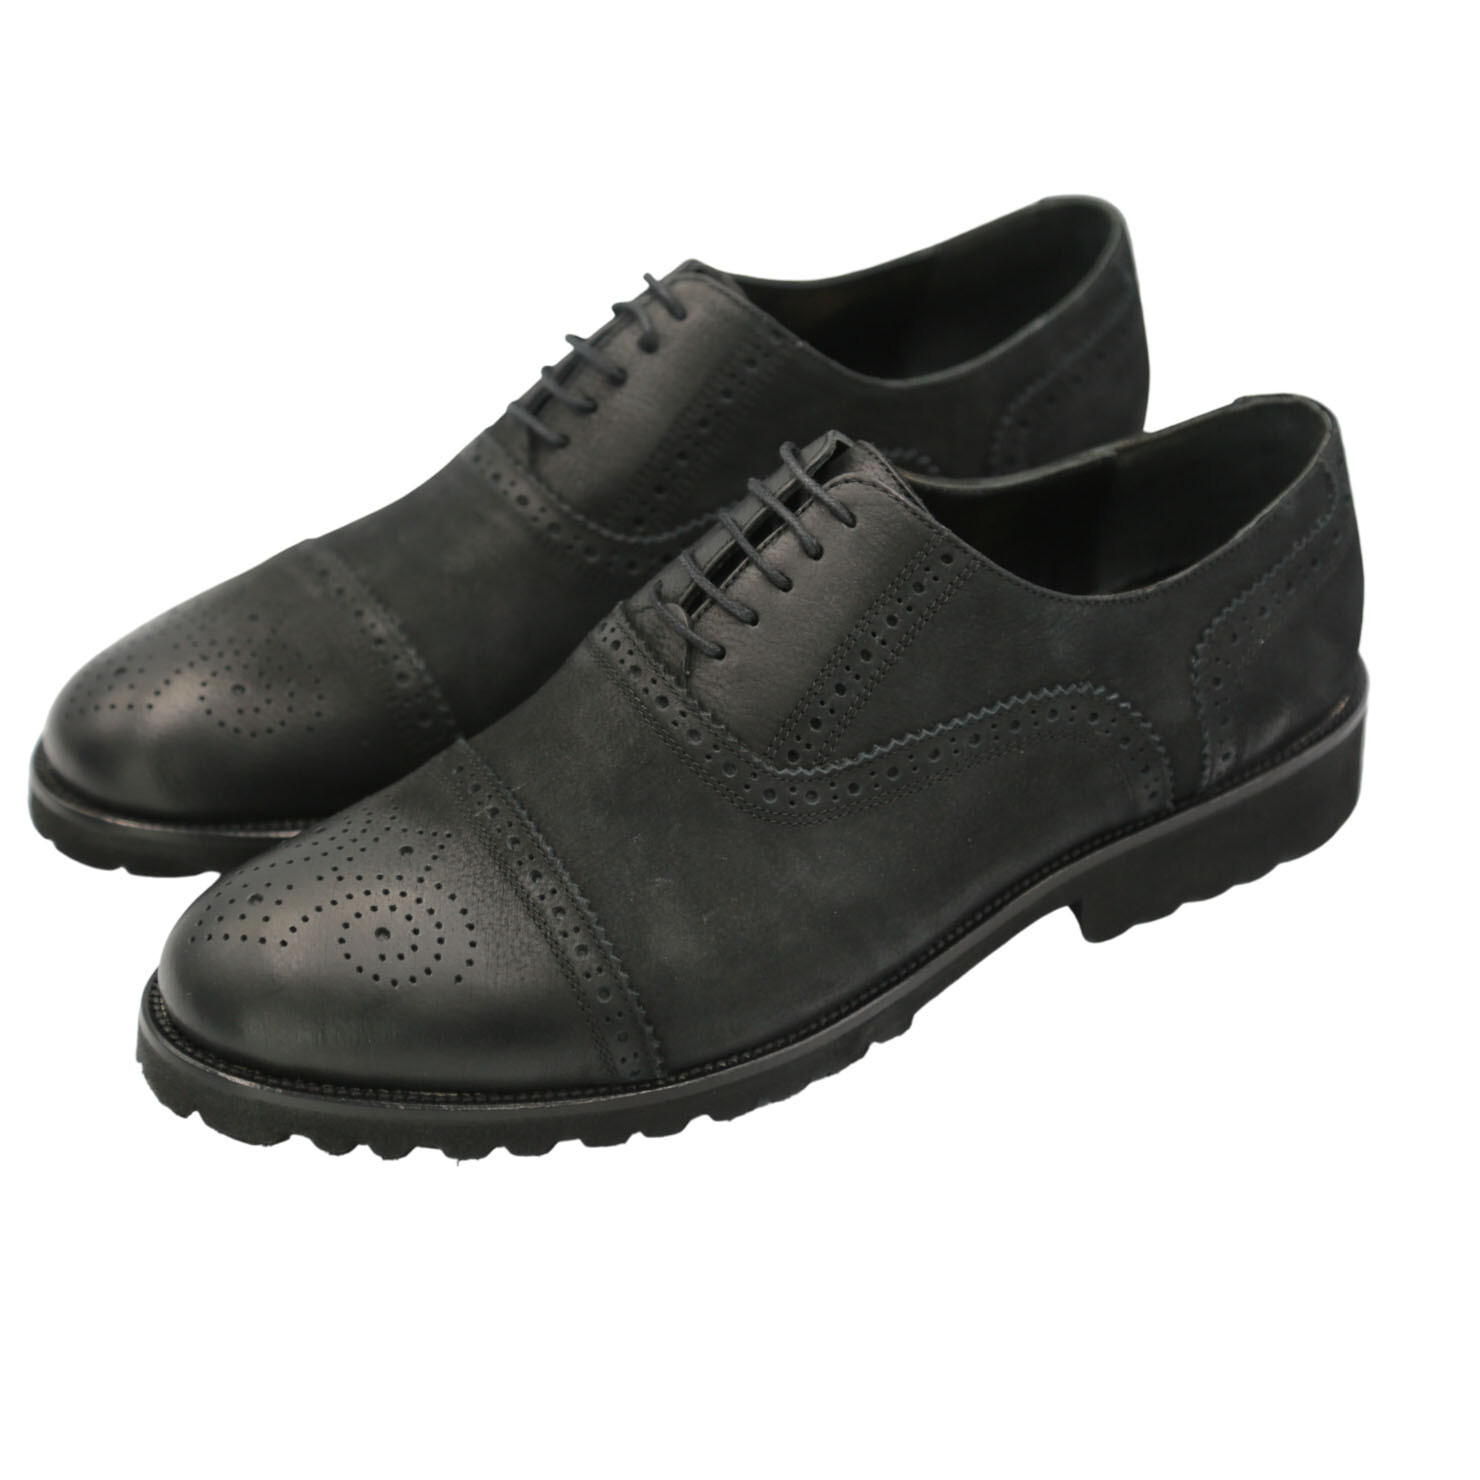 Men's Formal Leather Shoe